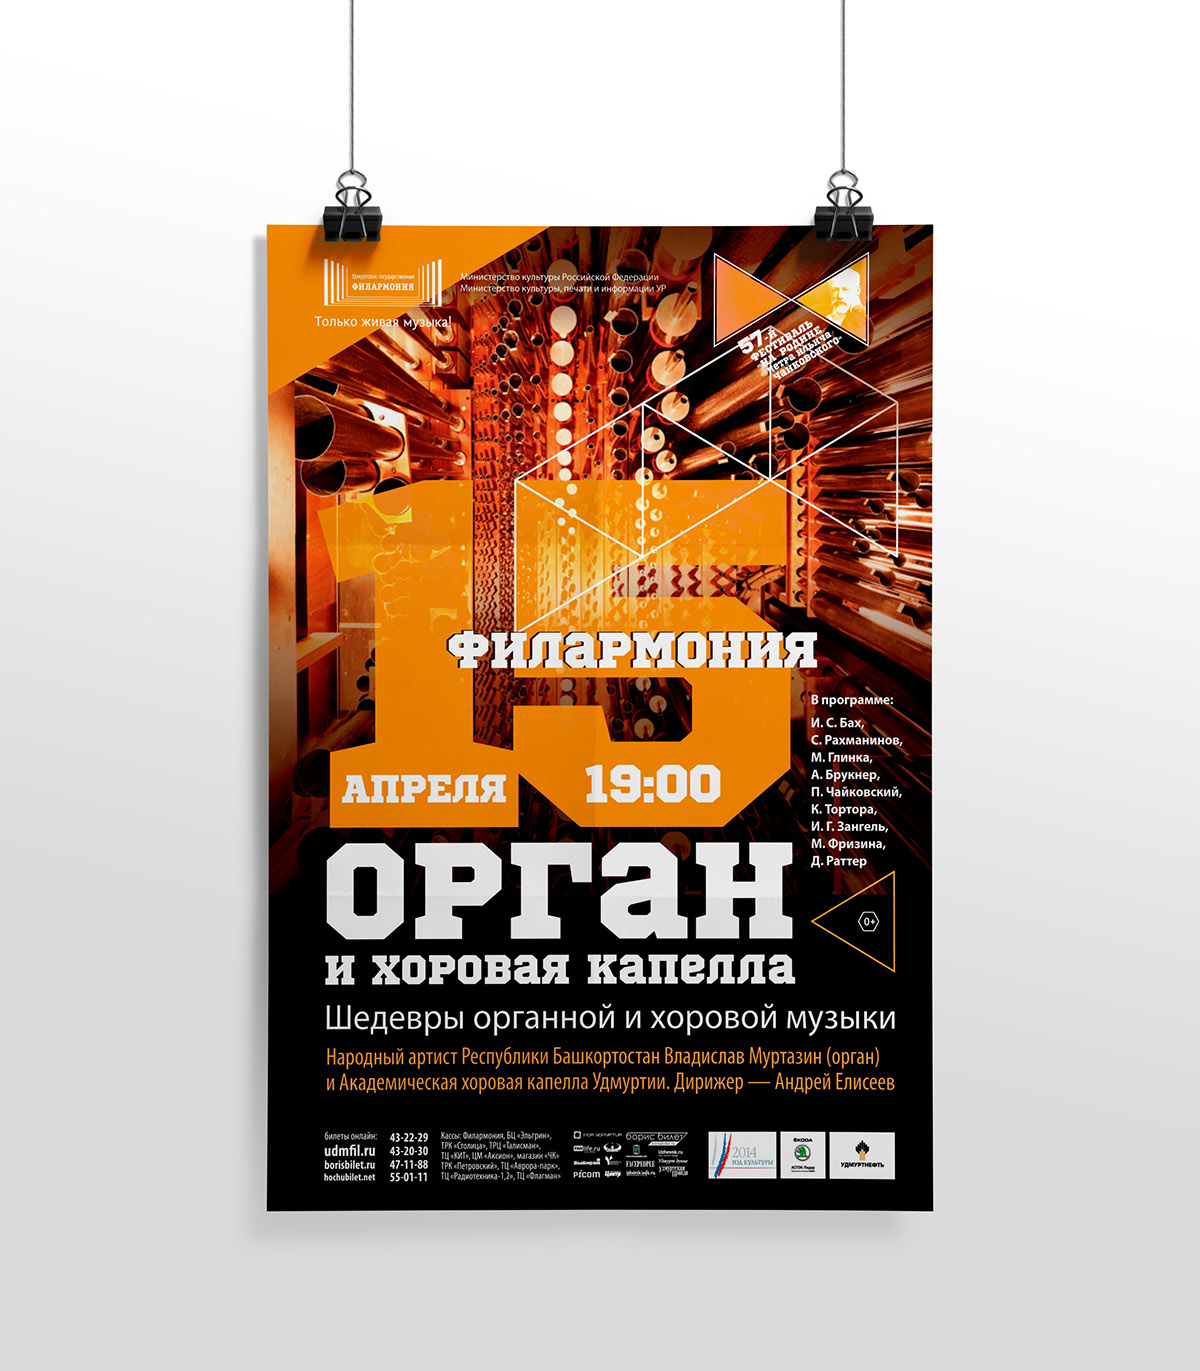 Music Festival festival philharmonic kaleidoscope Tchaikovsky bow tie poster music